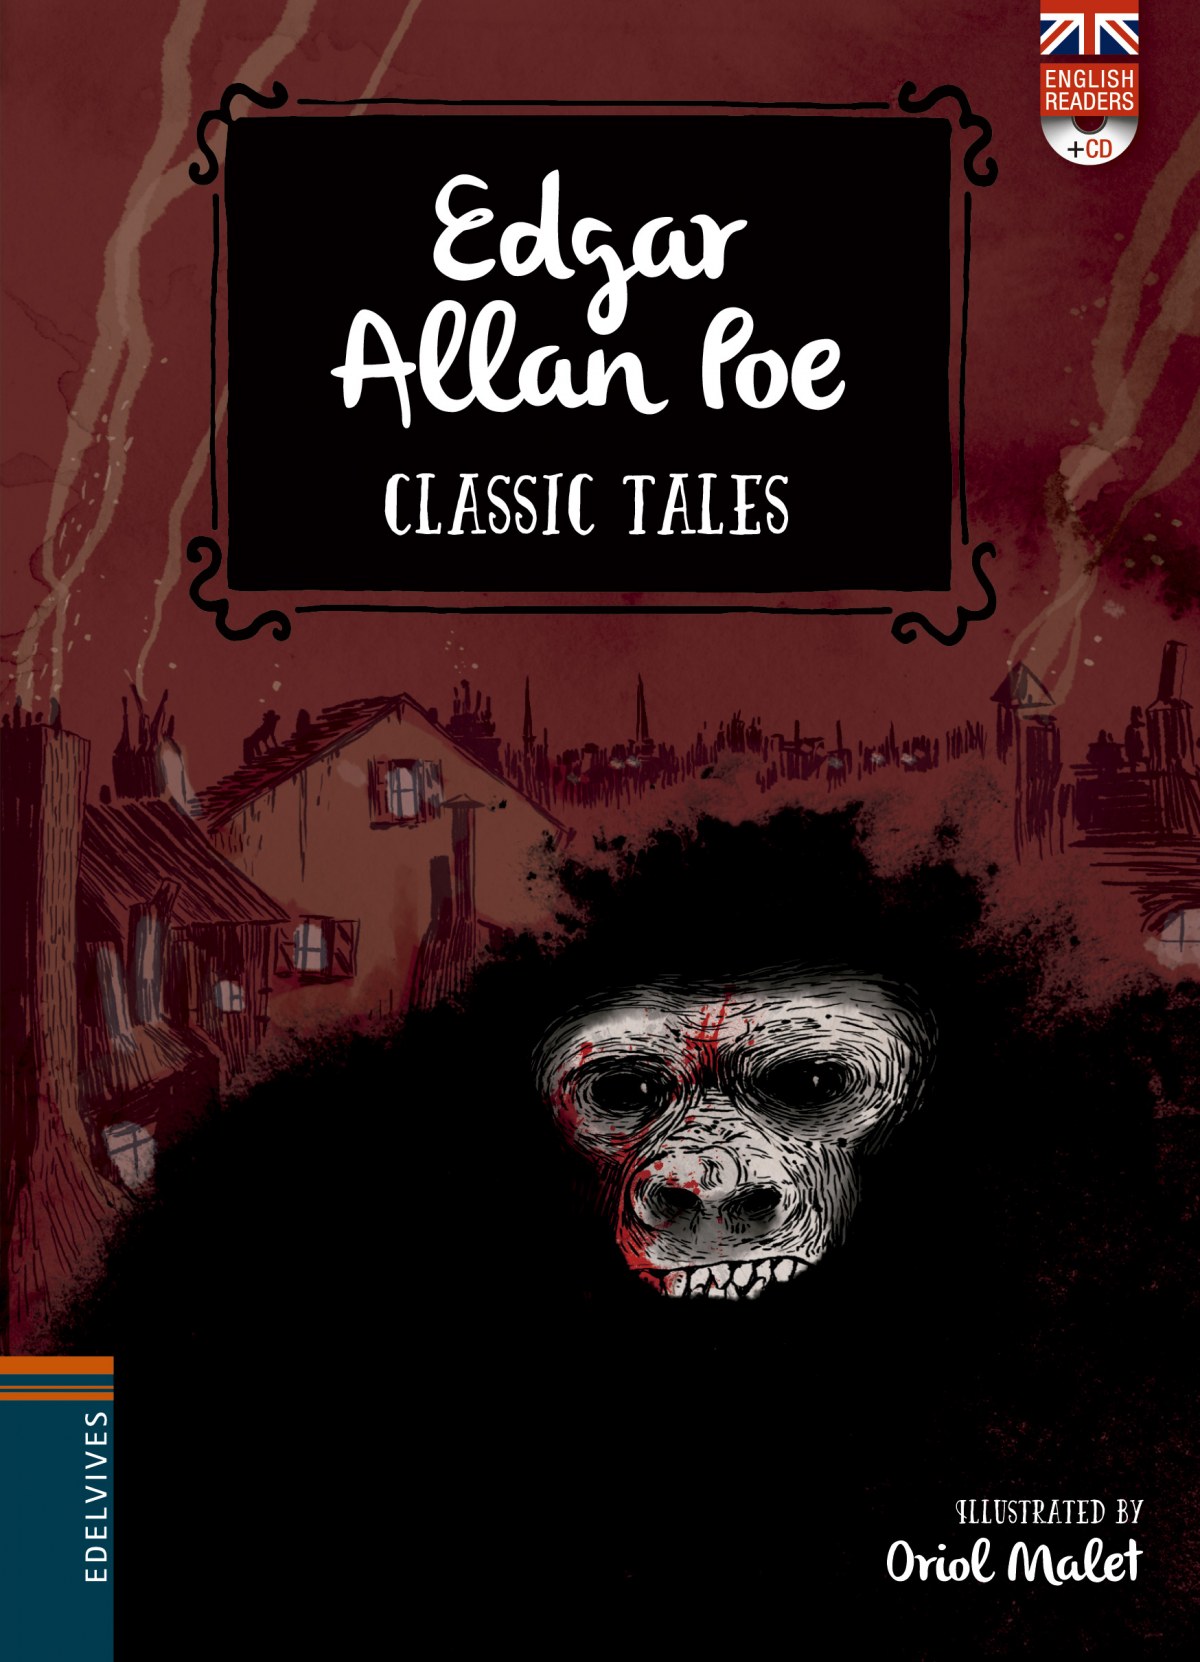 Classic Tales - Poe, Edgar Allan